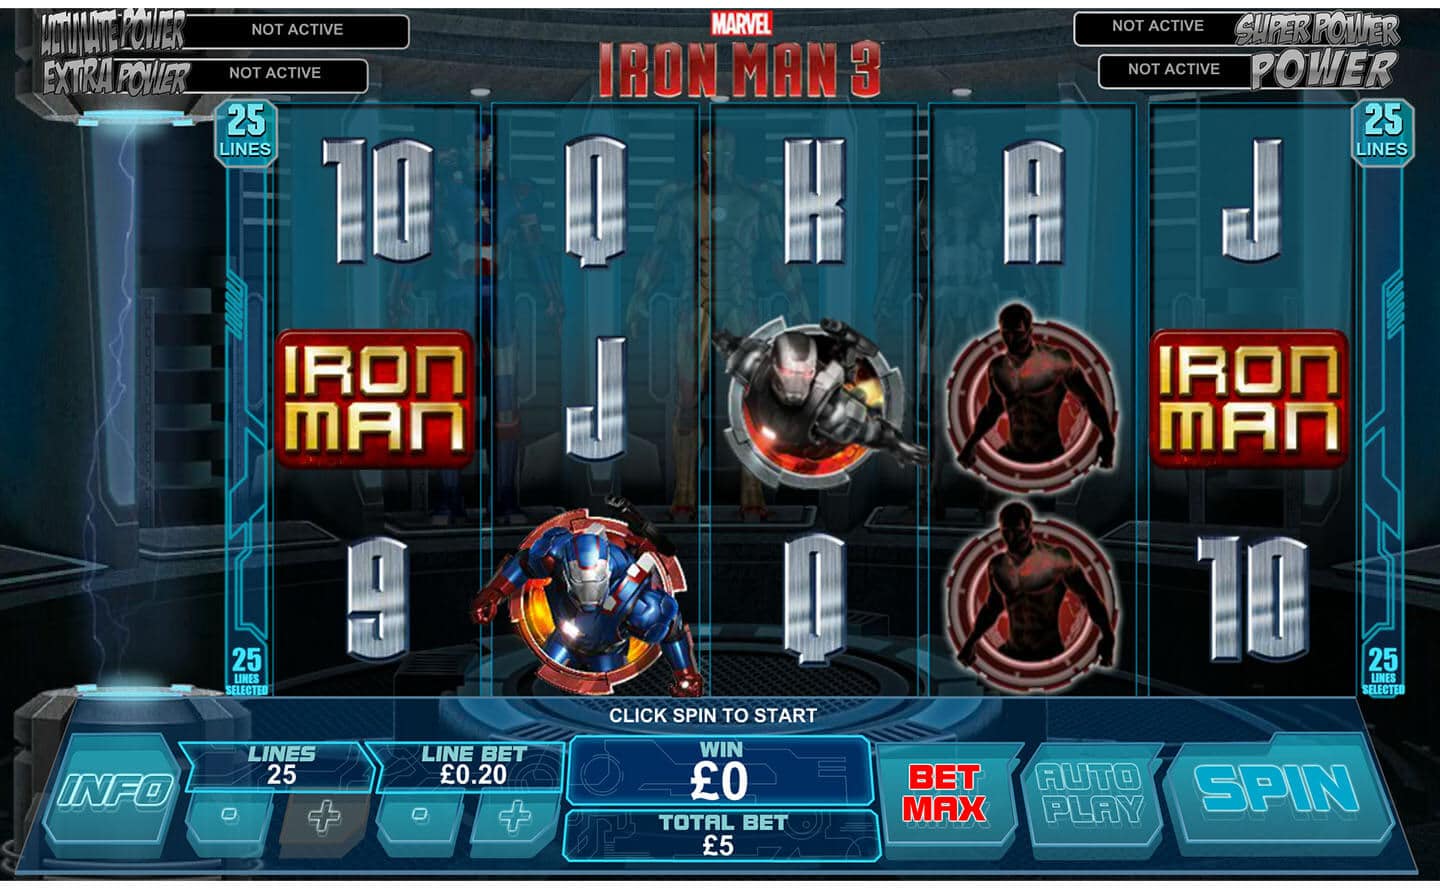 Ironman3 slot